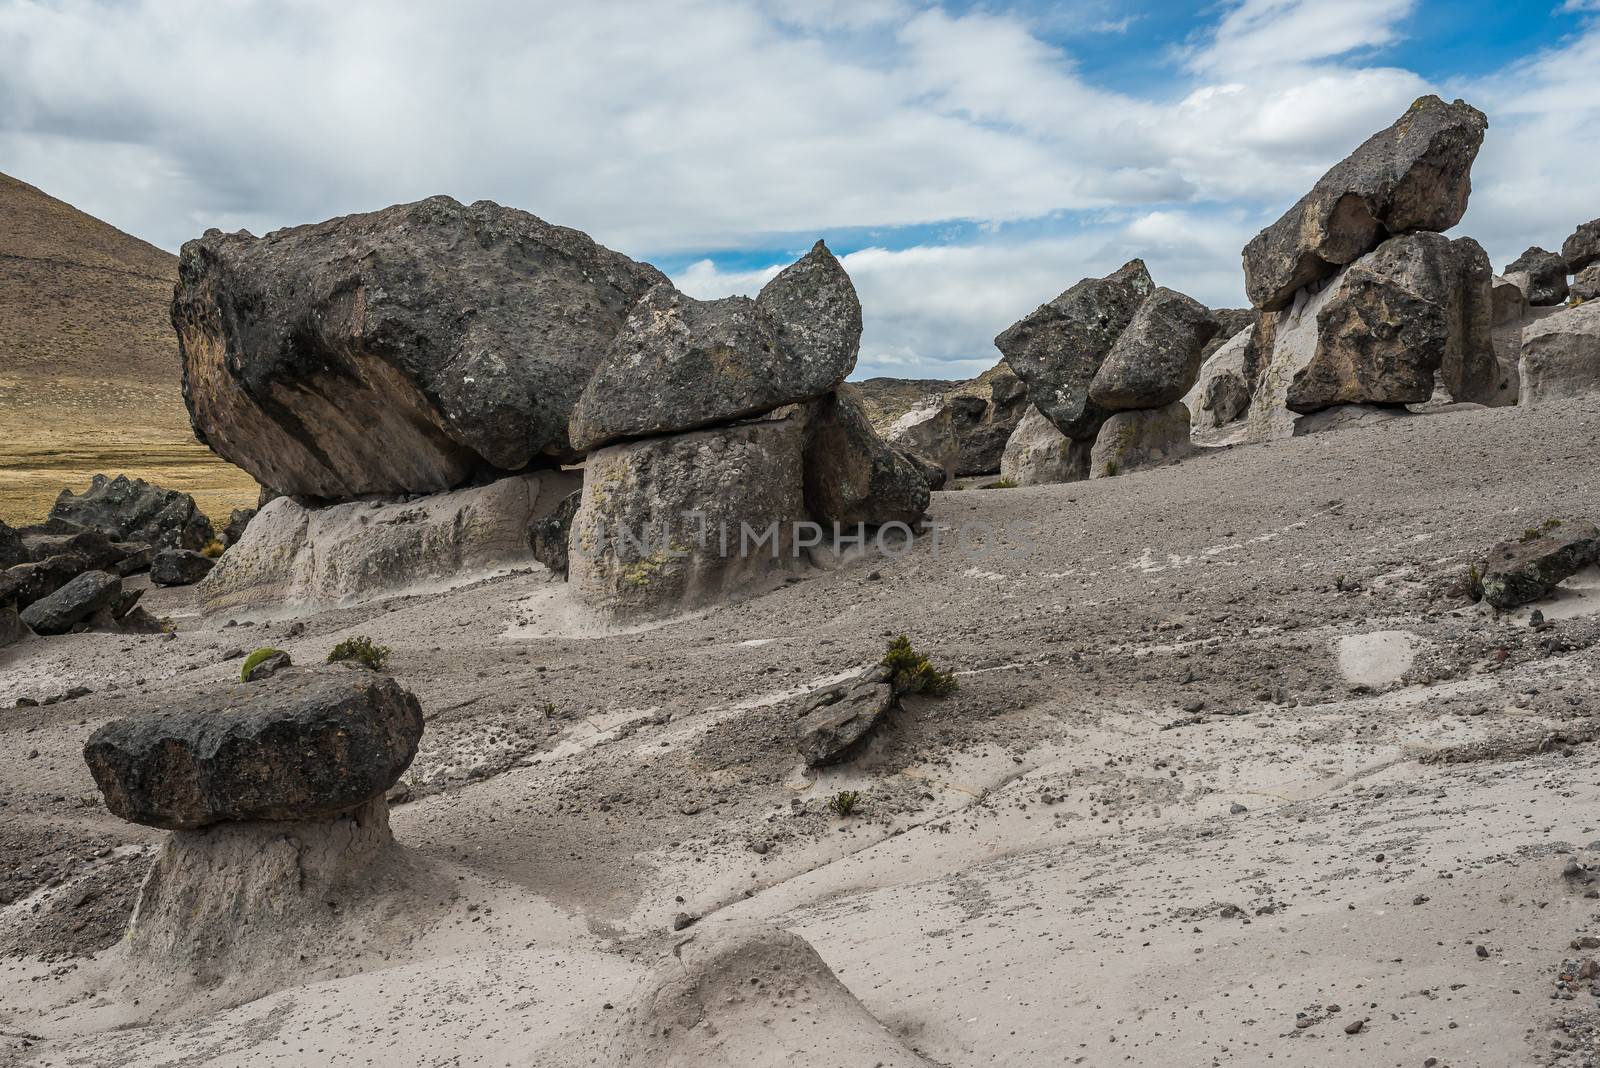 Imata Stone Forest in the peruvian Andes Arequipa Peru by PIXSTILL